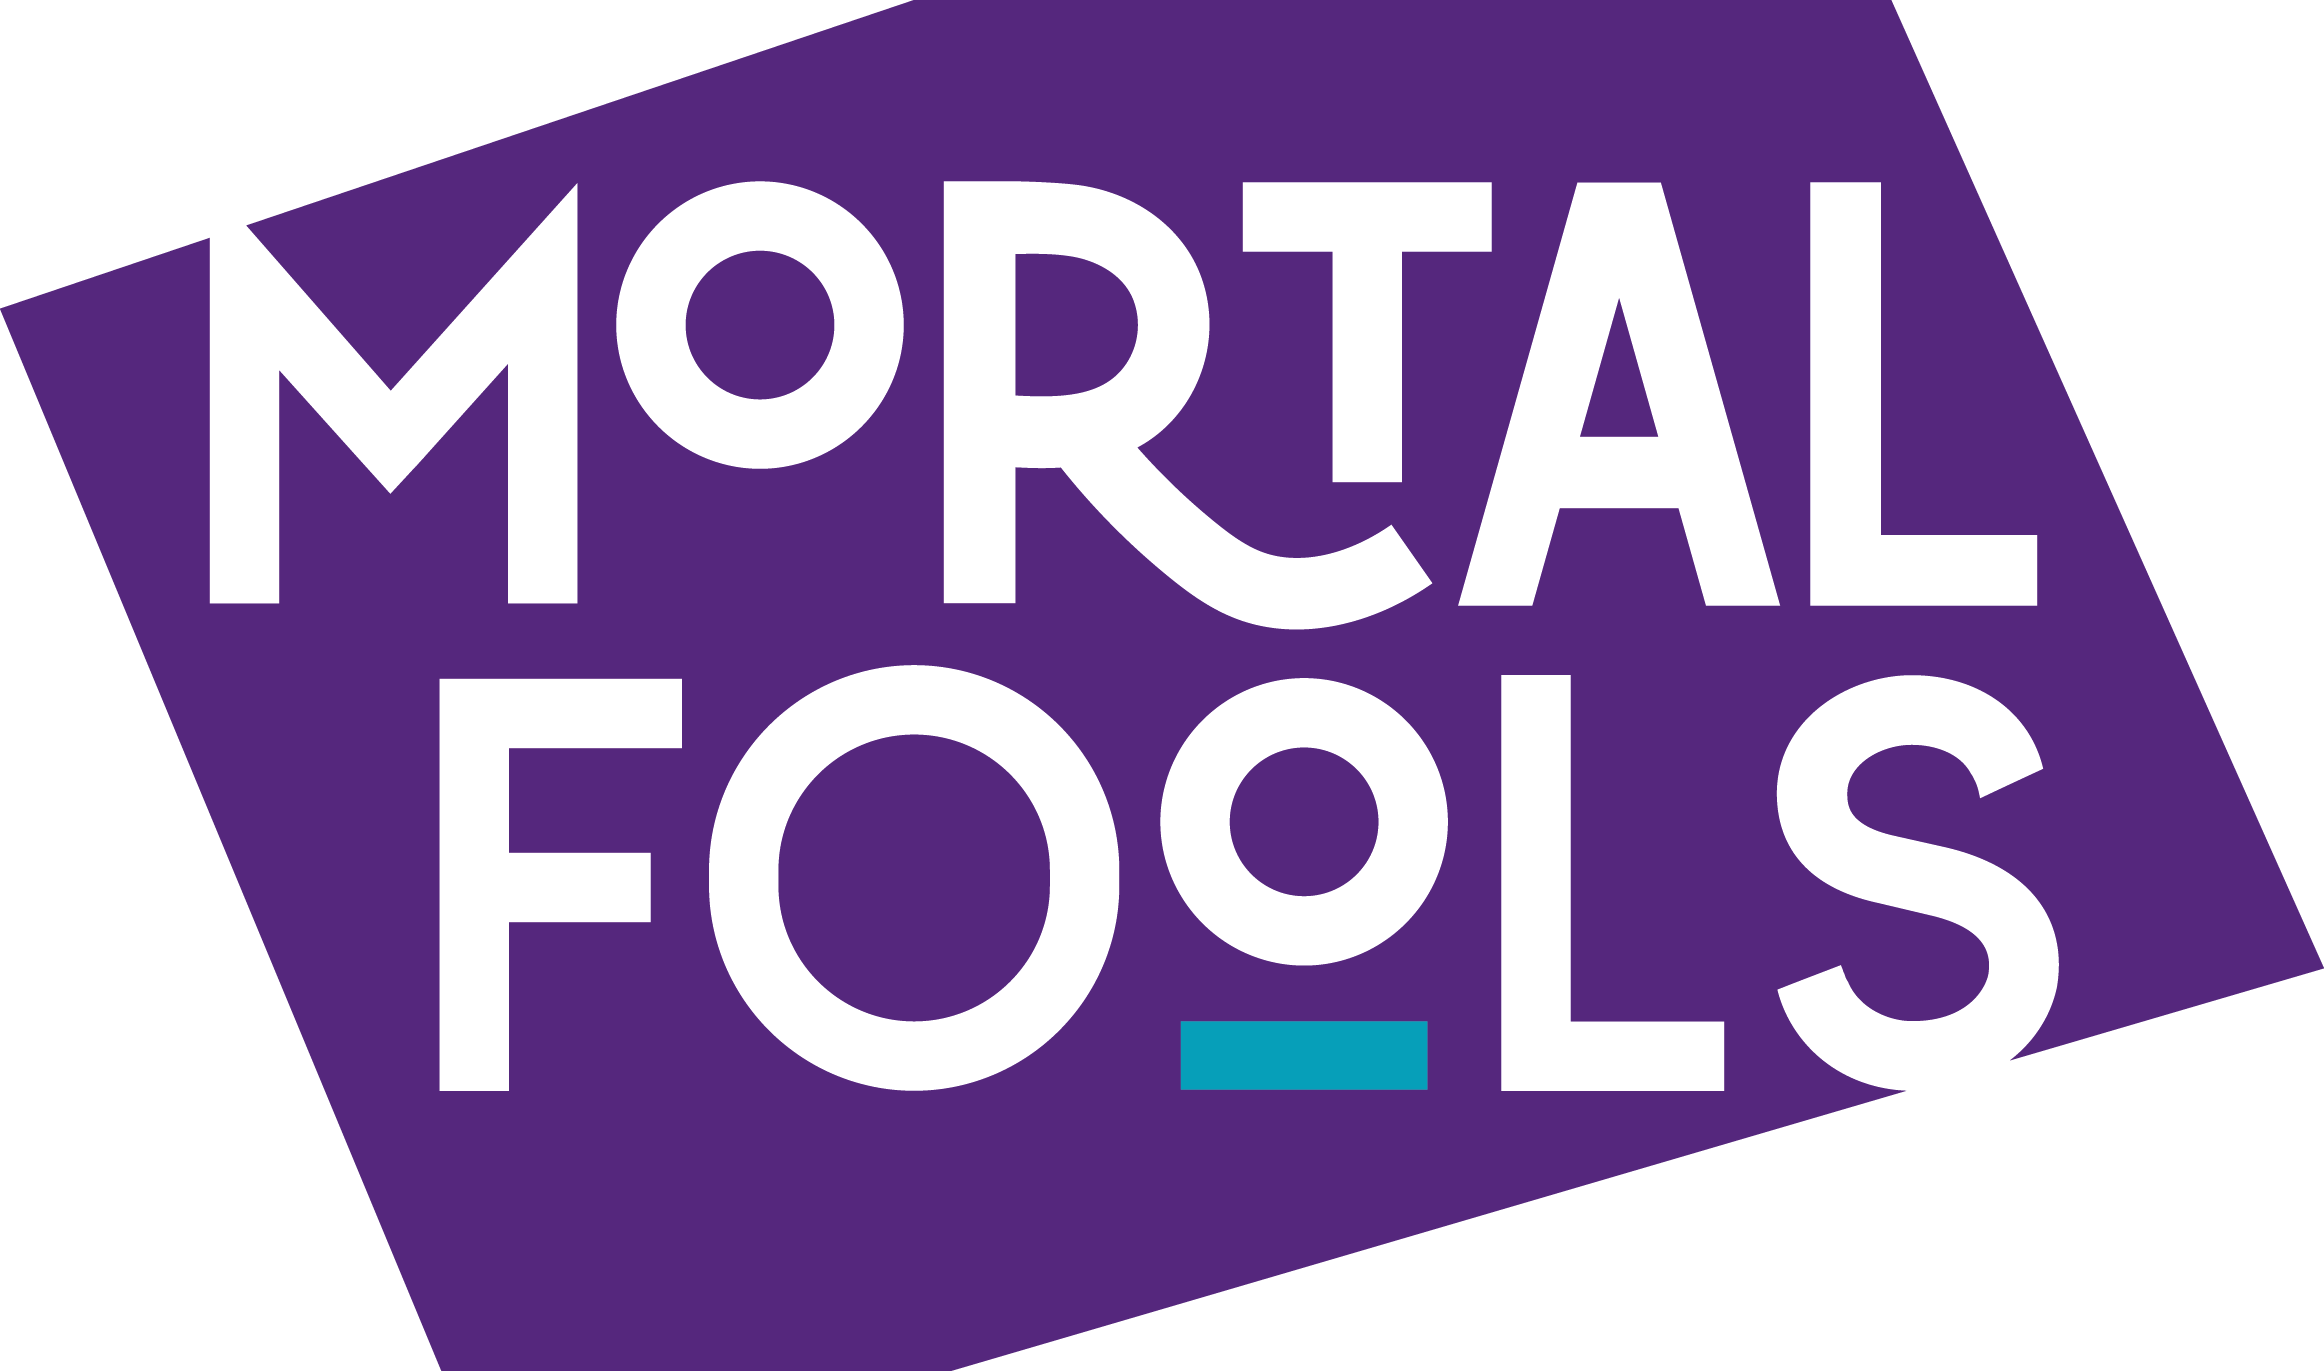 Pledge: Mortal Fools - Visit website Date of pledge: 12/11/20